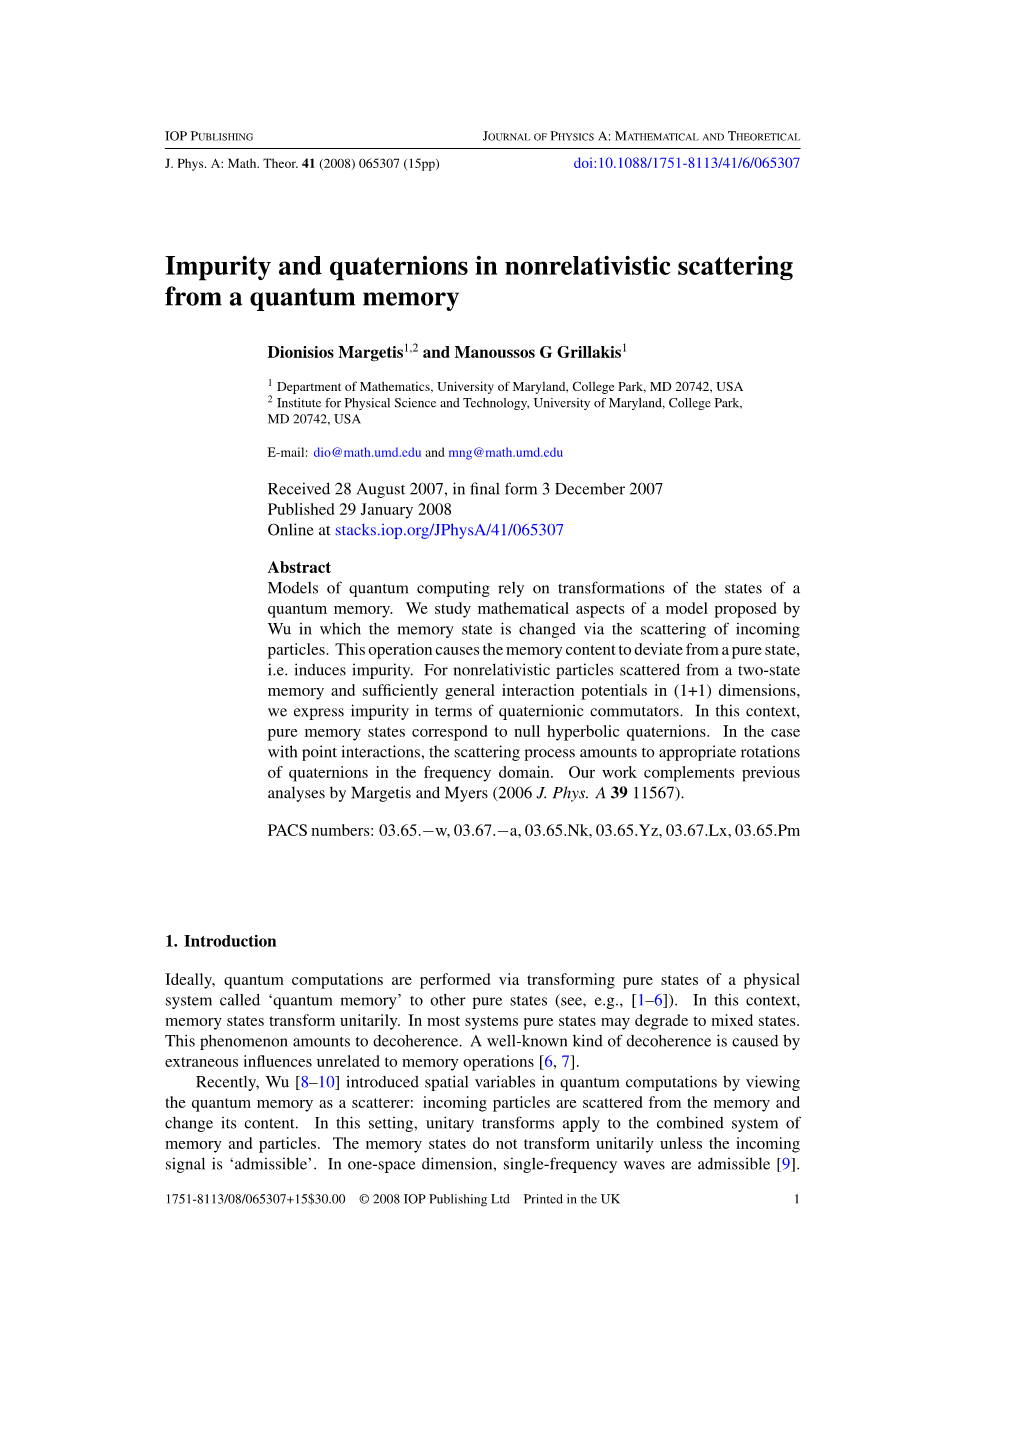 Impurity and Quaternions in Nonrelativistic Scattering from a Quantum Memory